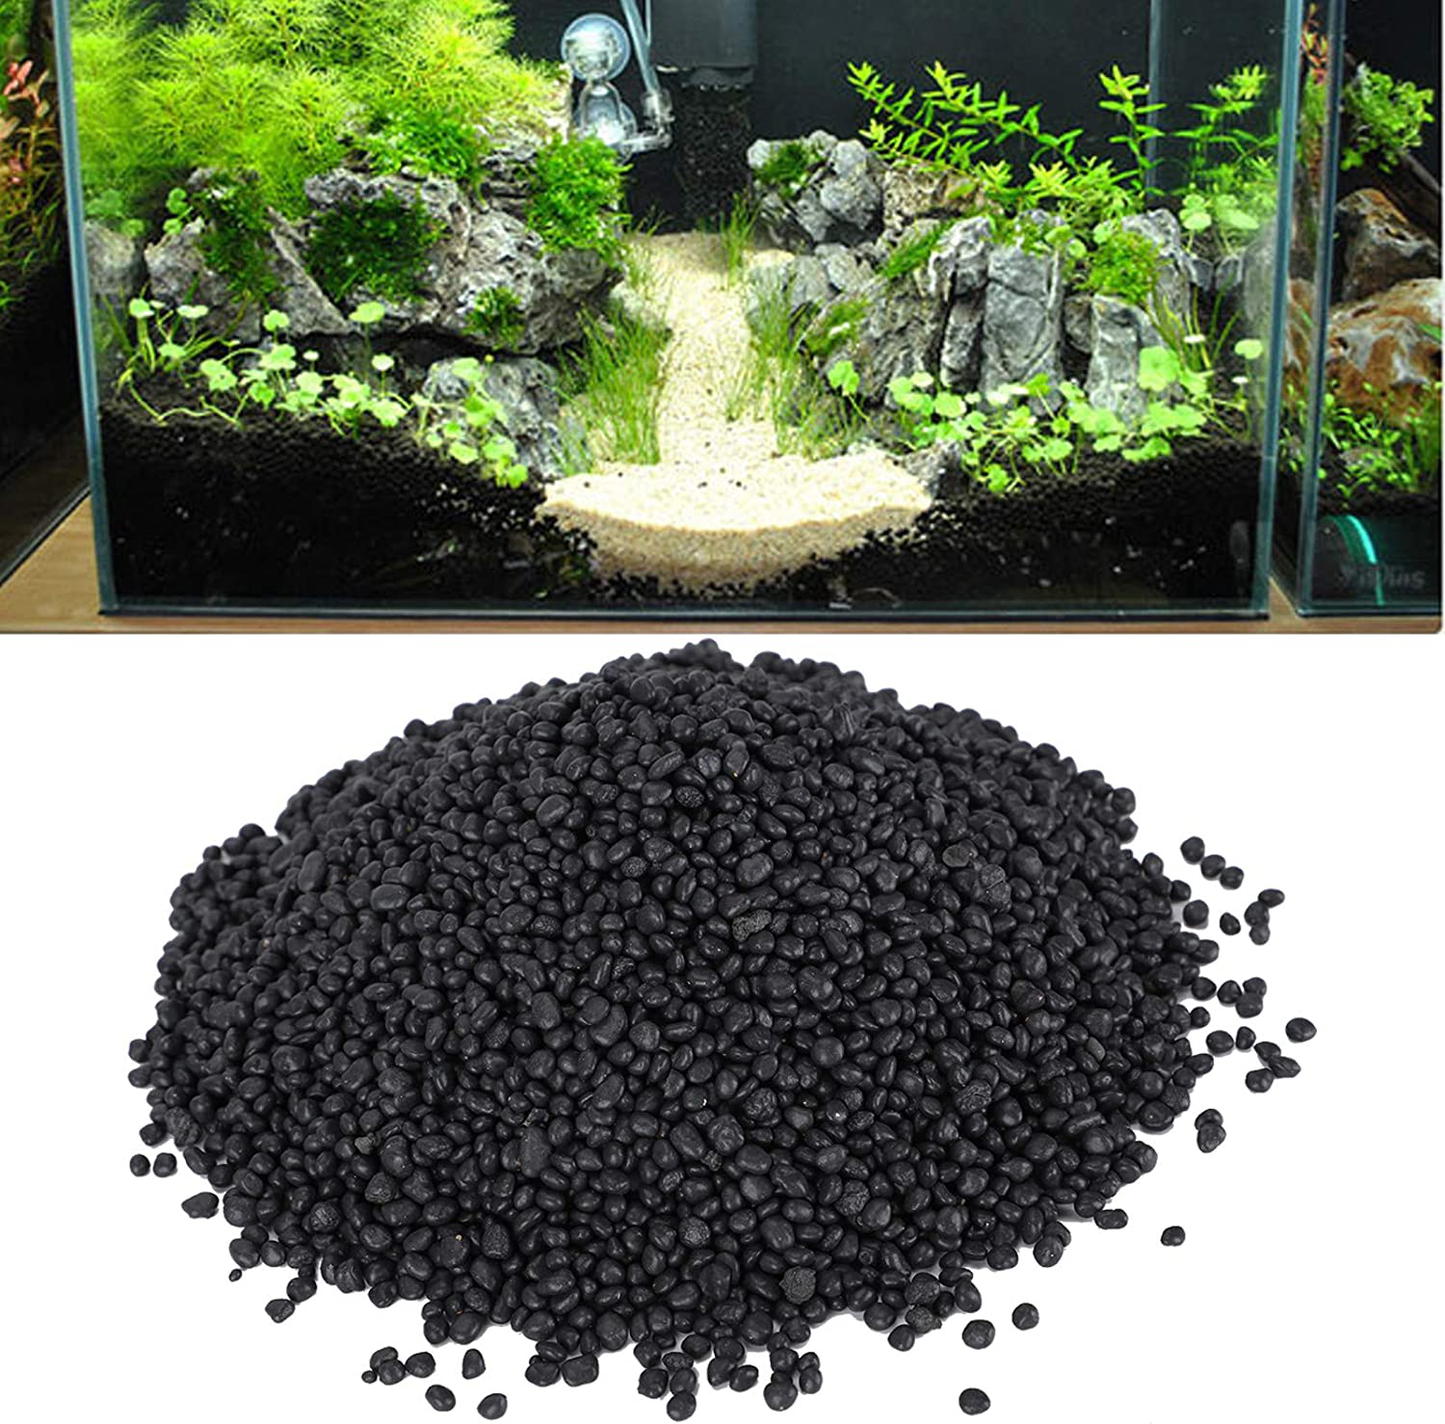 Aquarium Black Gravel Fish Tank Water Plants Mud Aquarium Substrate Soil for Aquariums Landscaping Vases Plants 1Kg